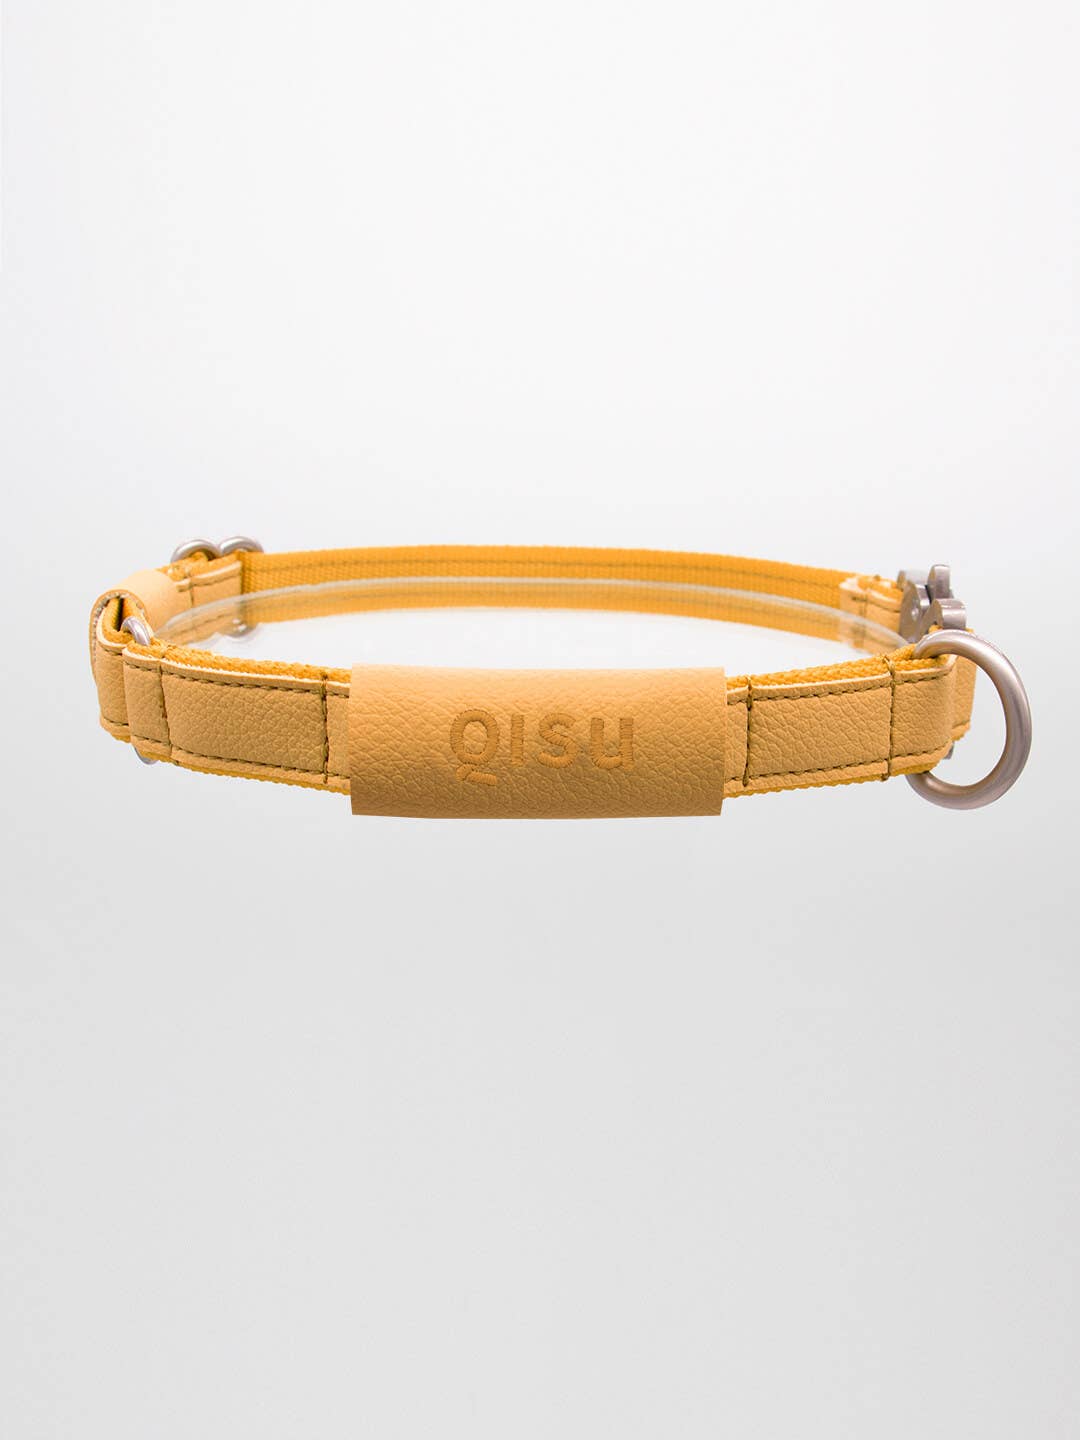 Qisu - Dog Collar | Air Collection: / Kiwi